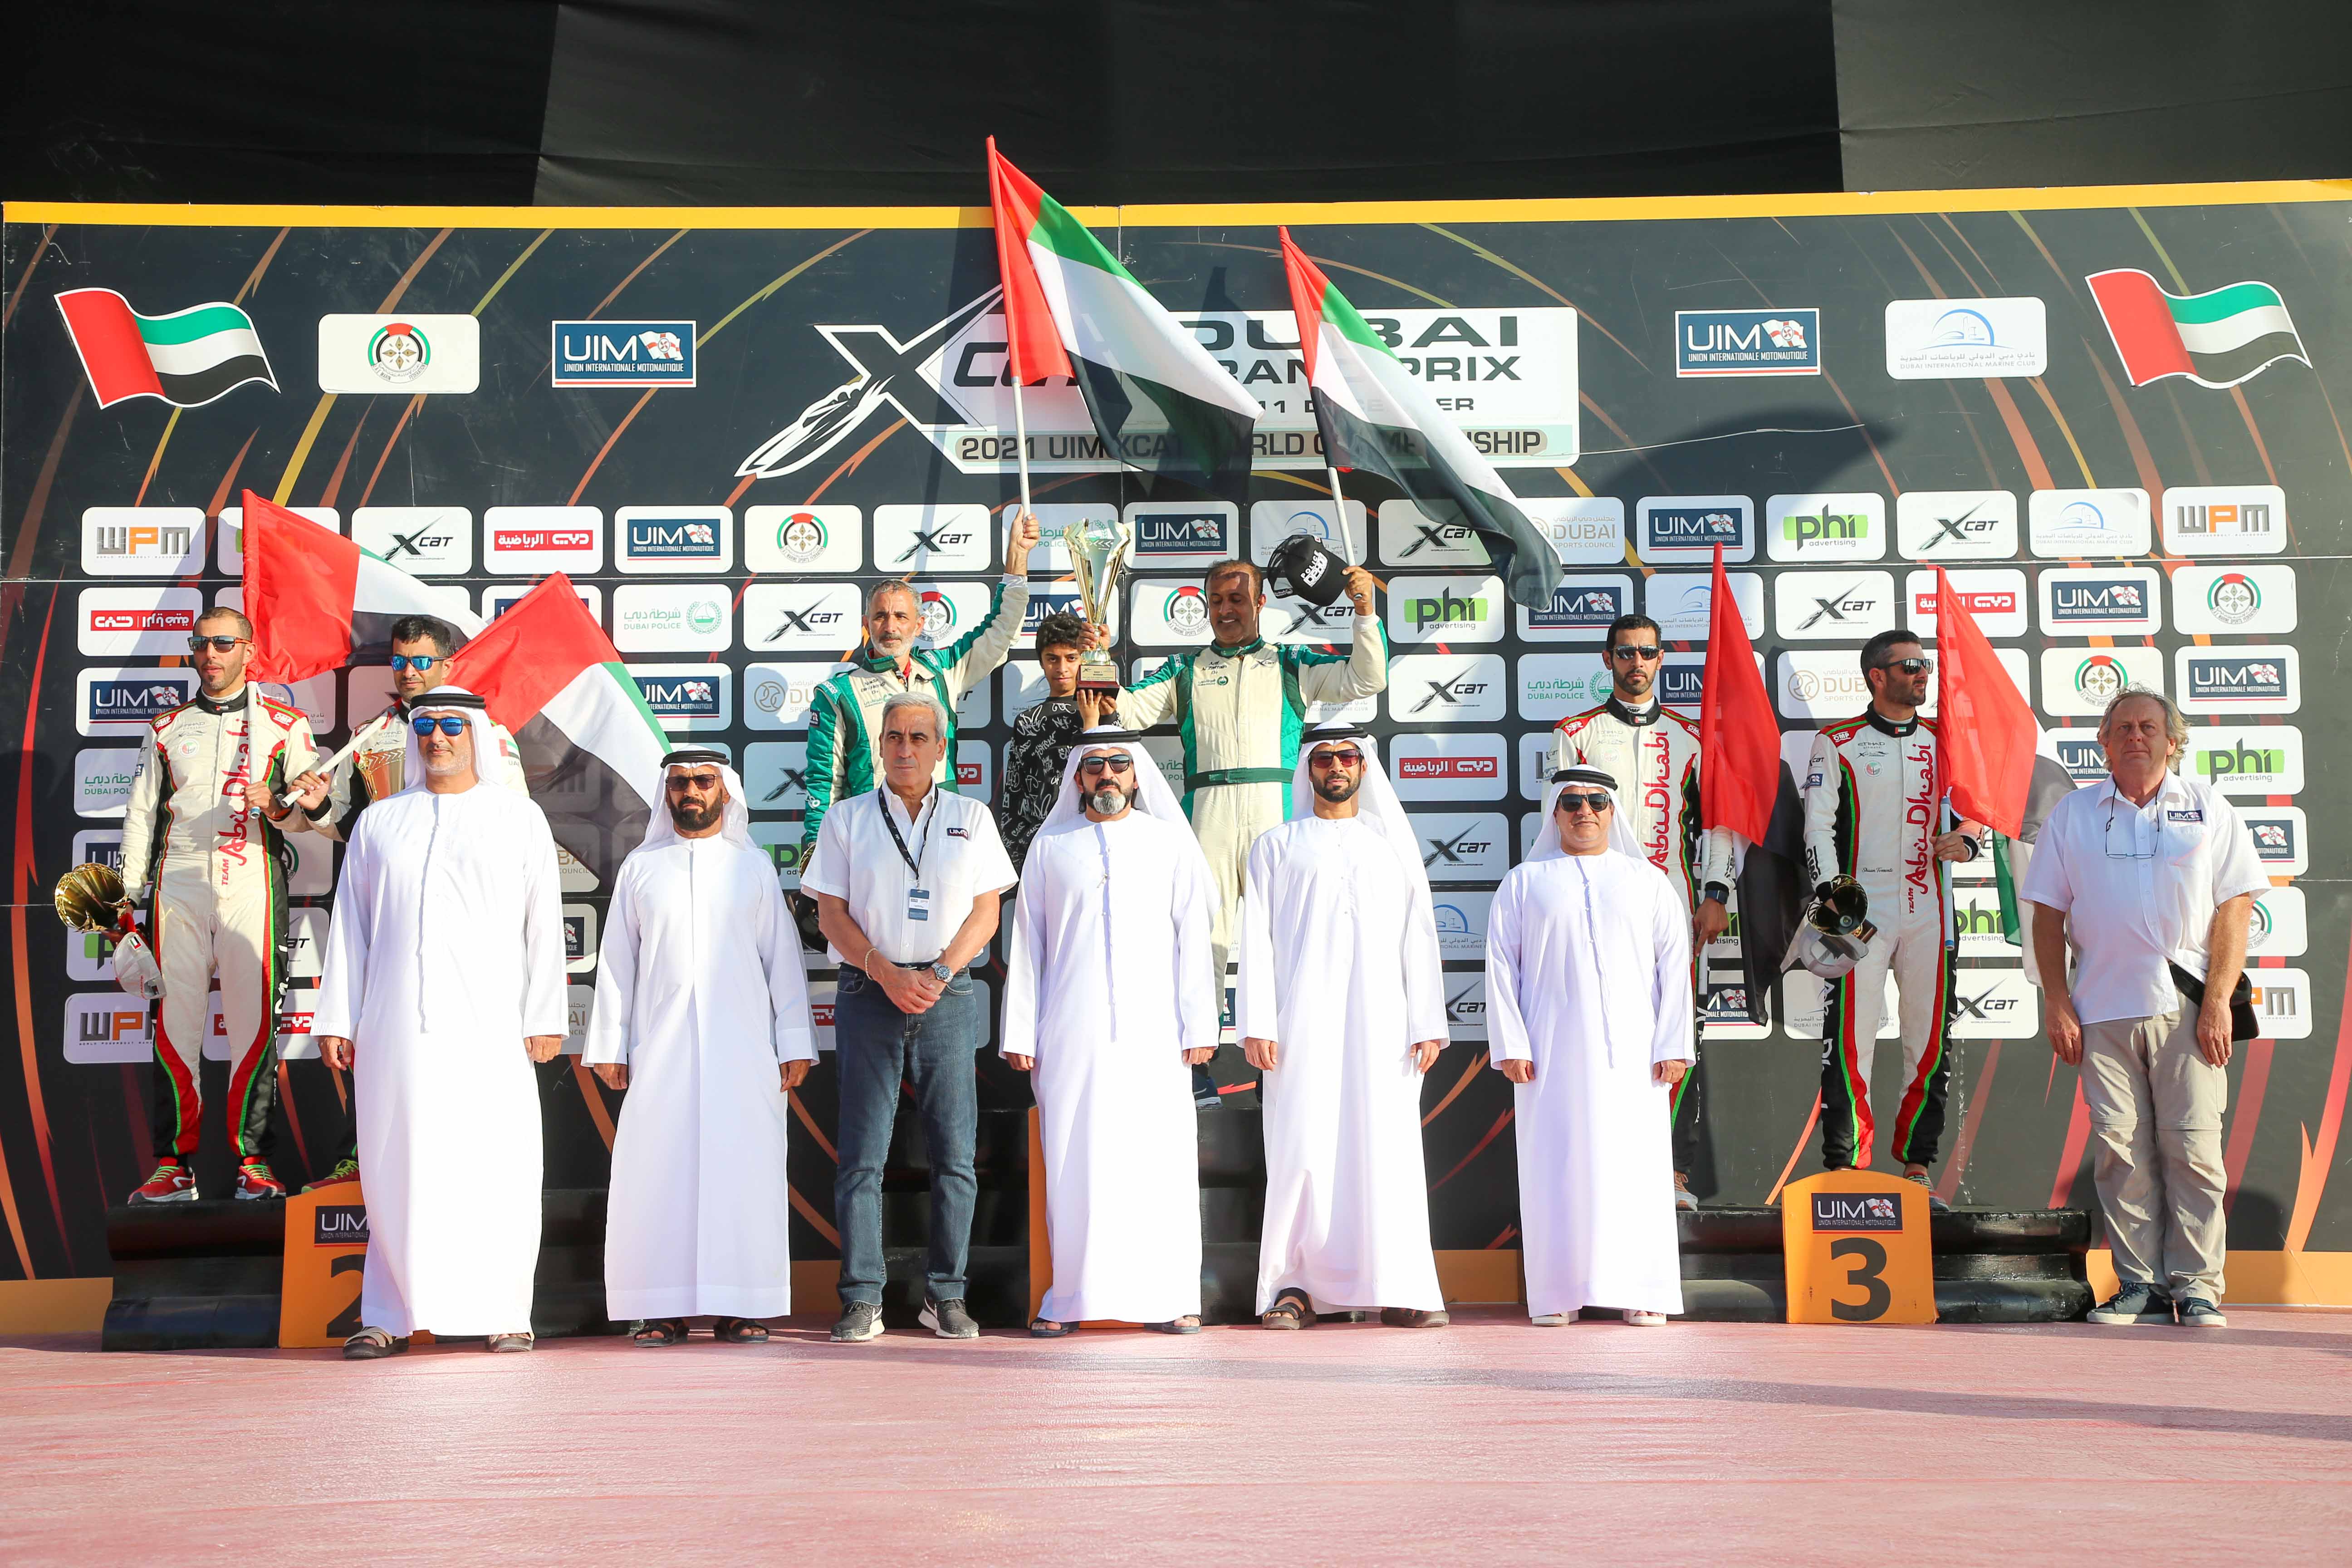 Dubai Police 3 won the first race in Dubai GP at XCAT World Championship